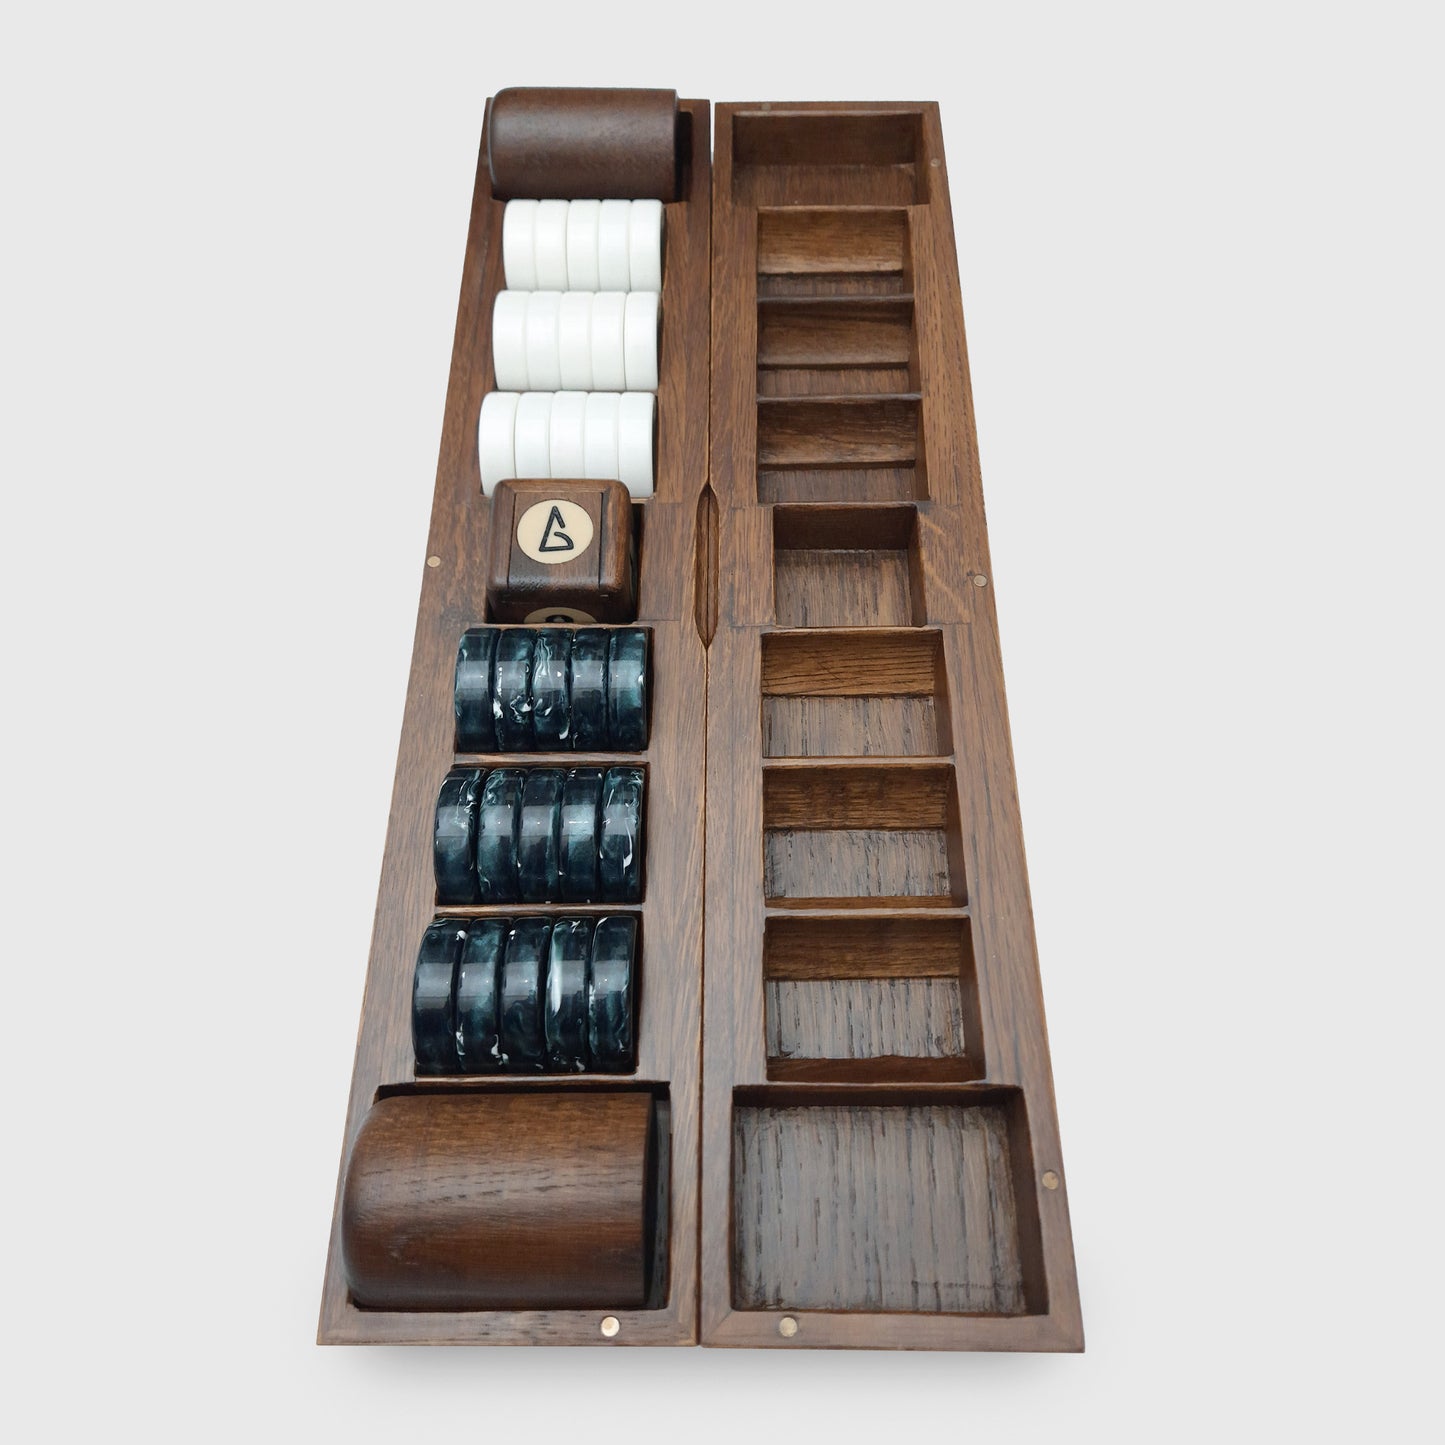 The Earth Board, Luxury Backgammon Set, Innovative Design, Eco-friendly